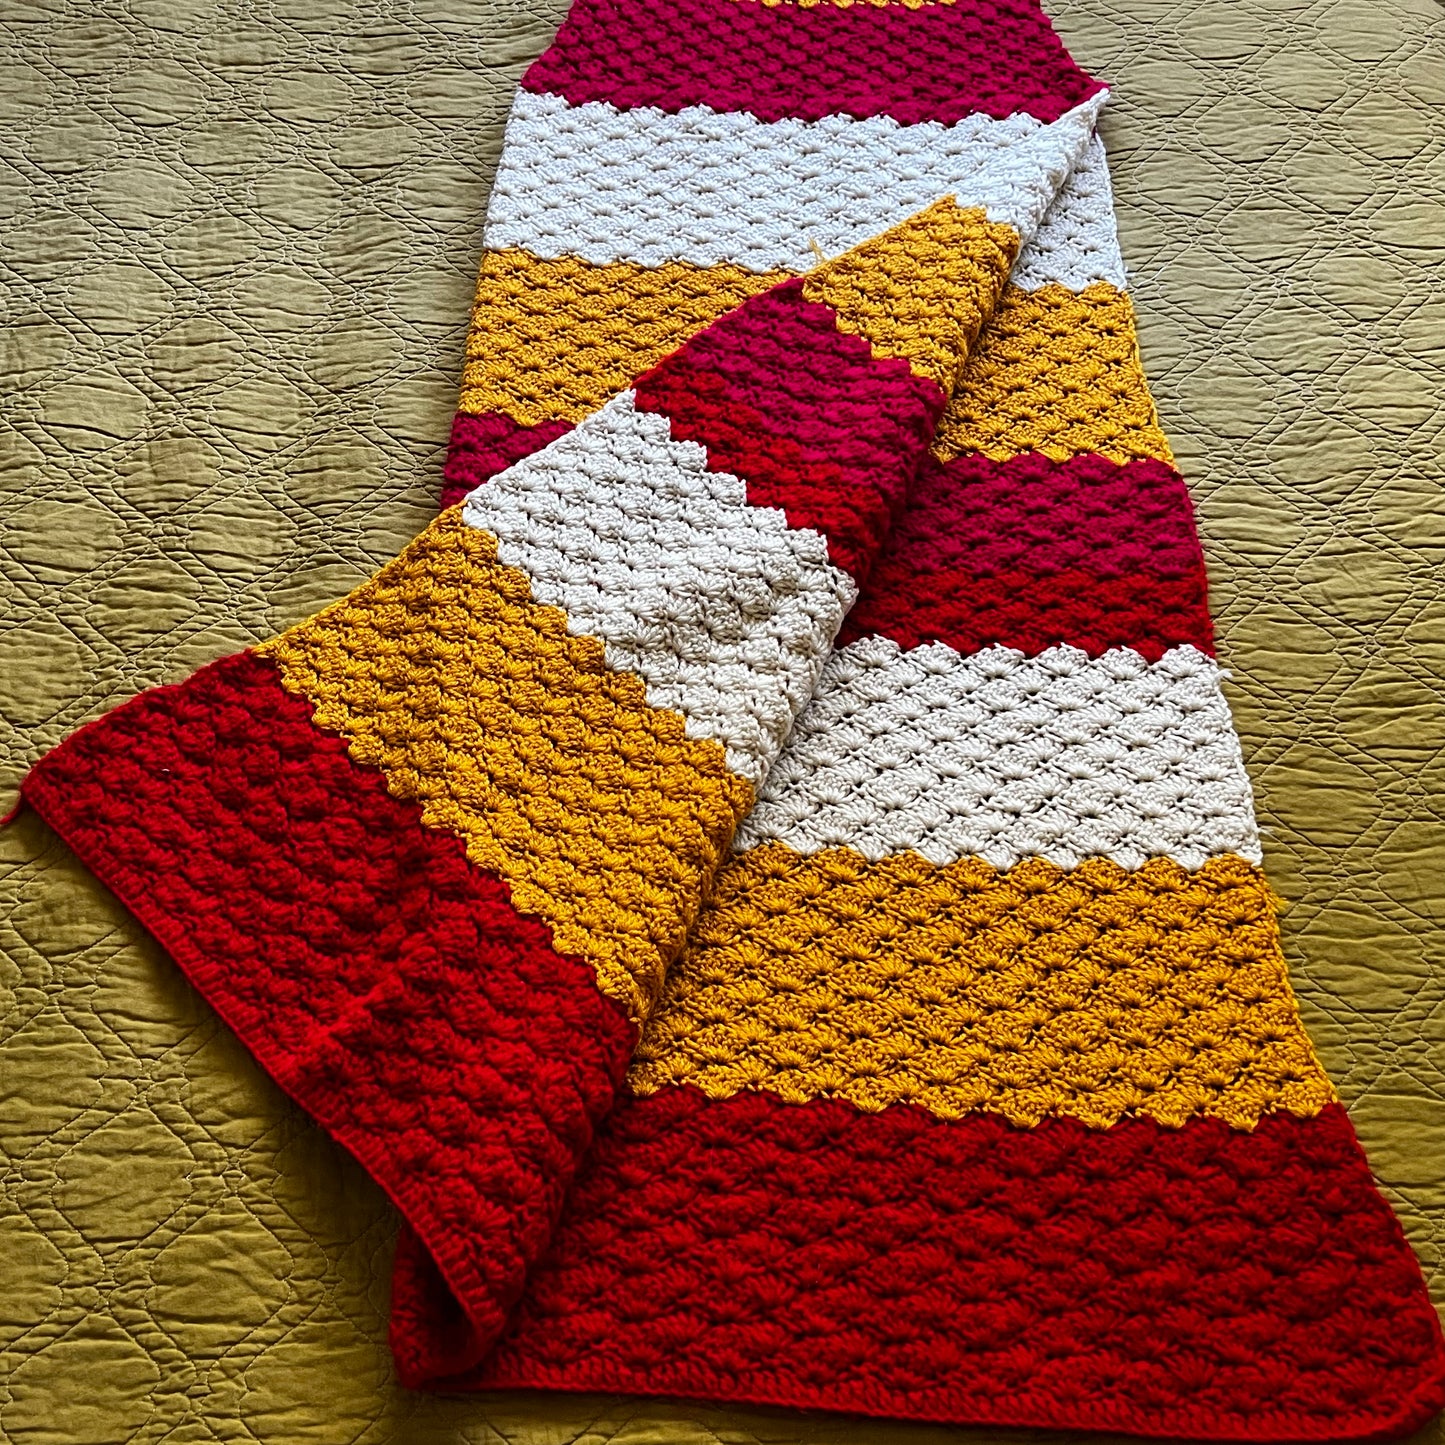 The Yellowtail- Vintage Crochet Mermaid Tail Blanket